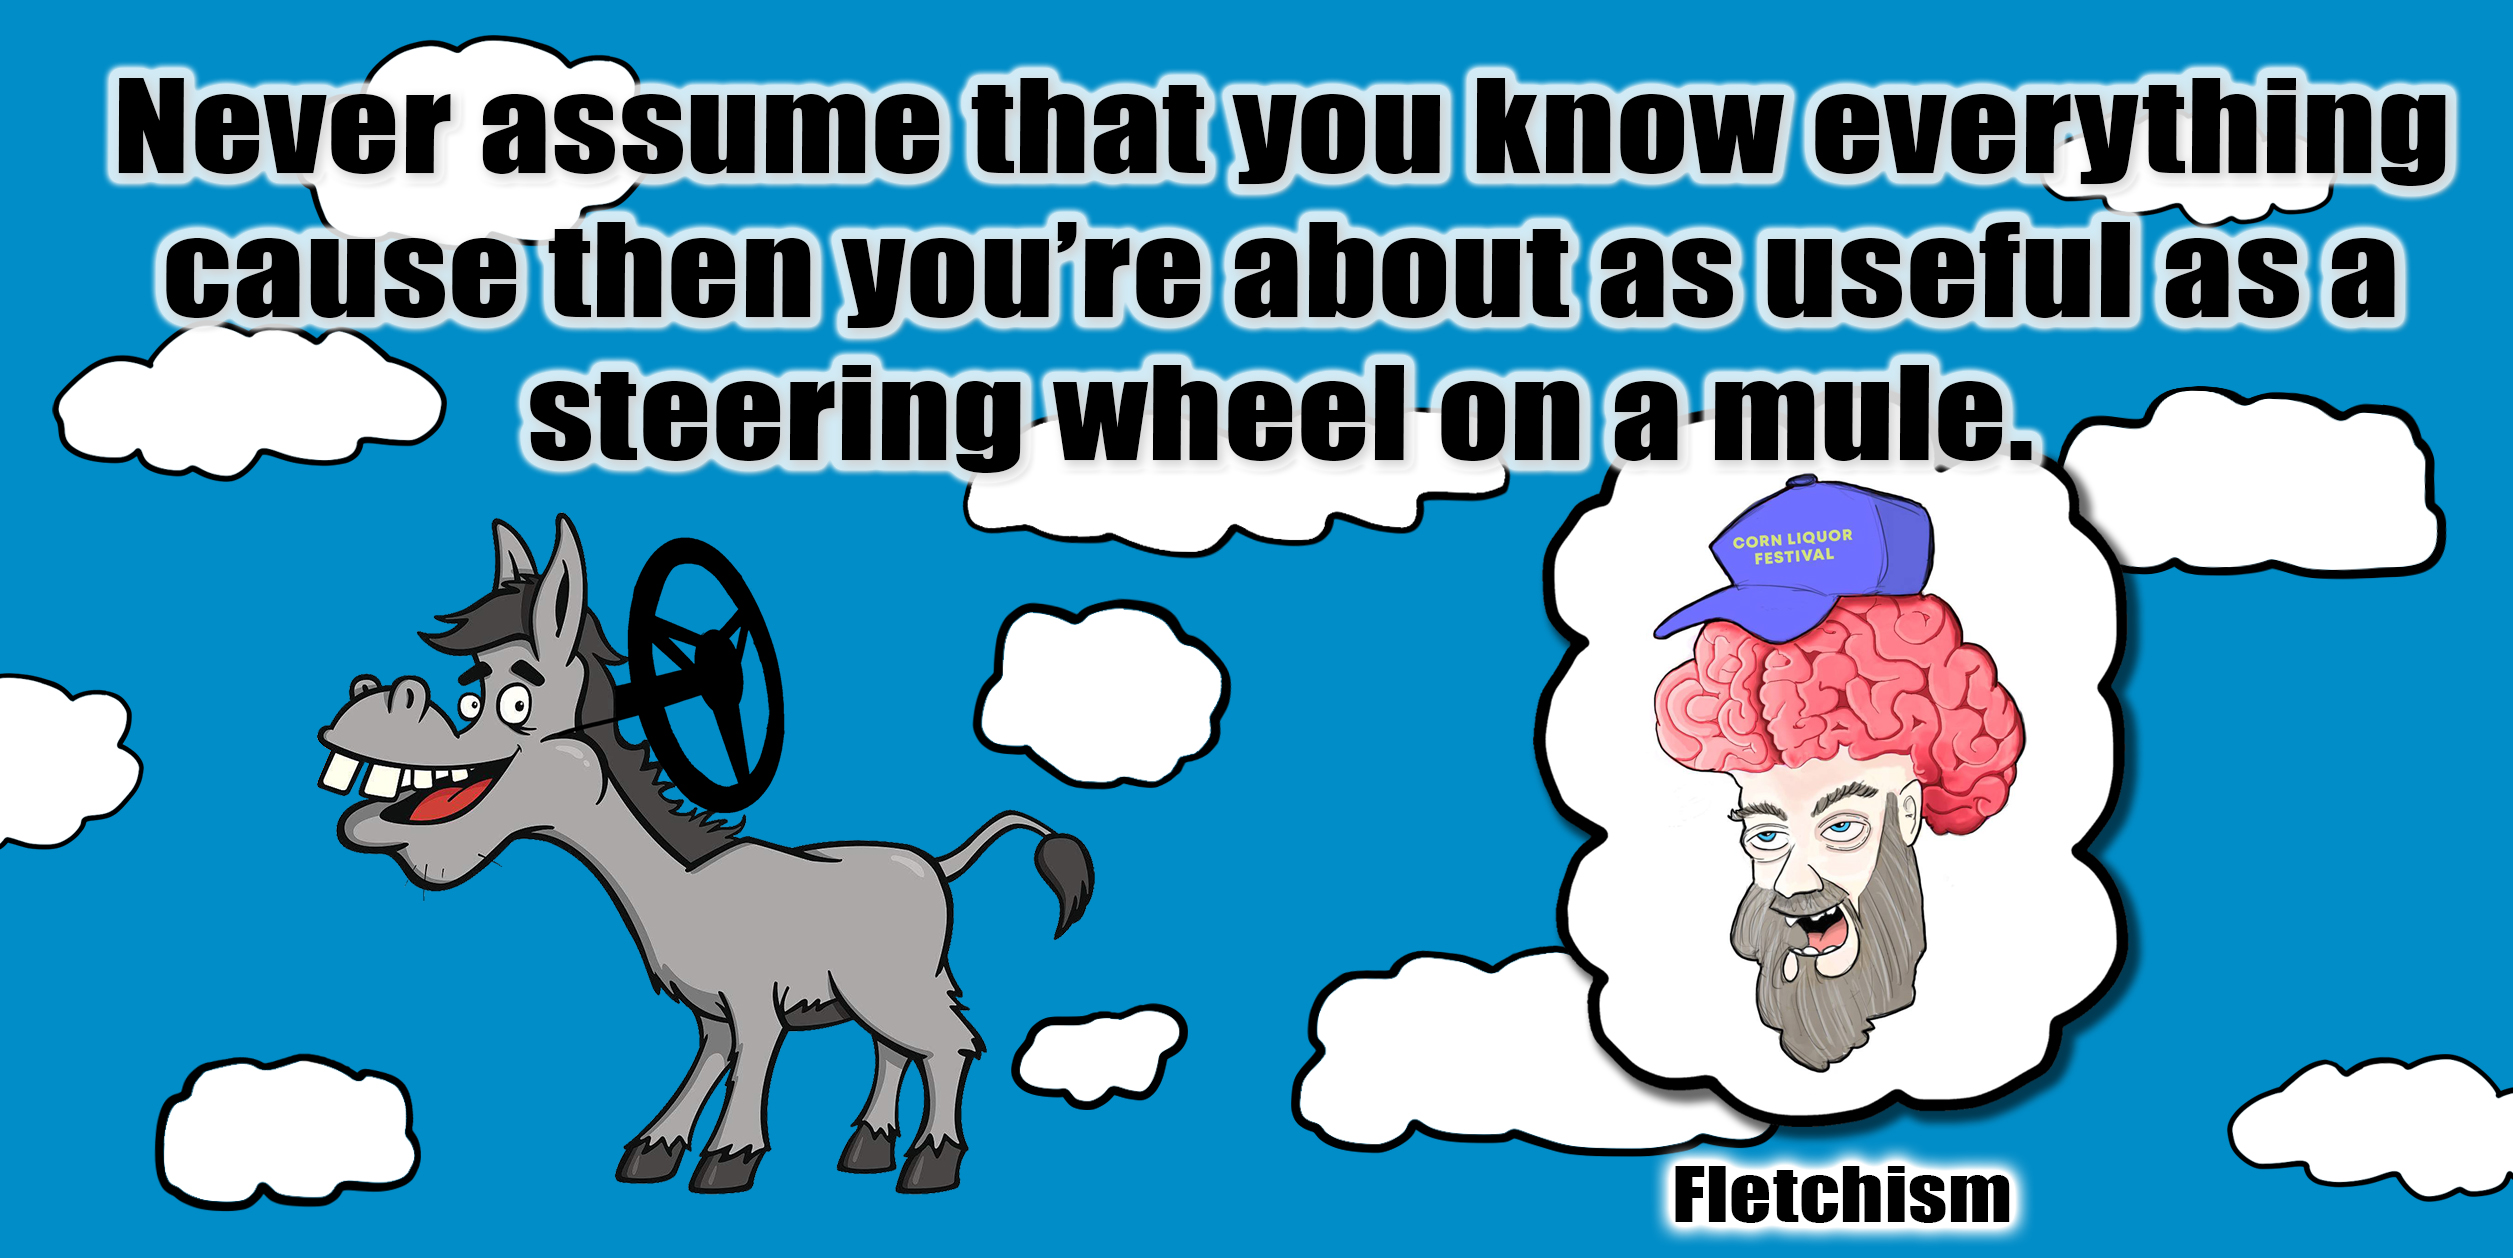 Fletchism - Useful as a steerin wheel on a mule